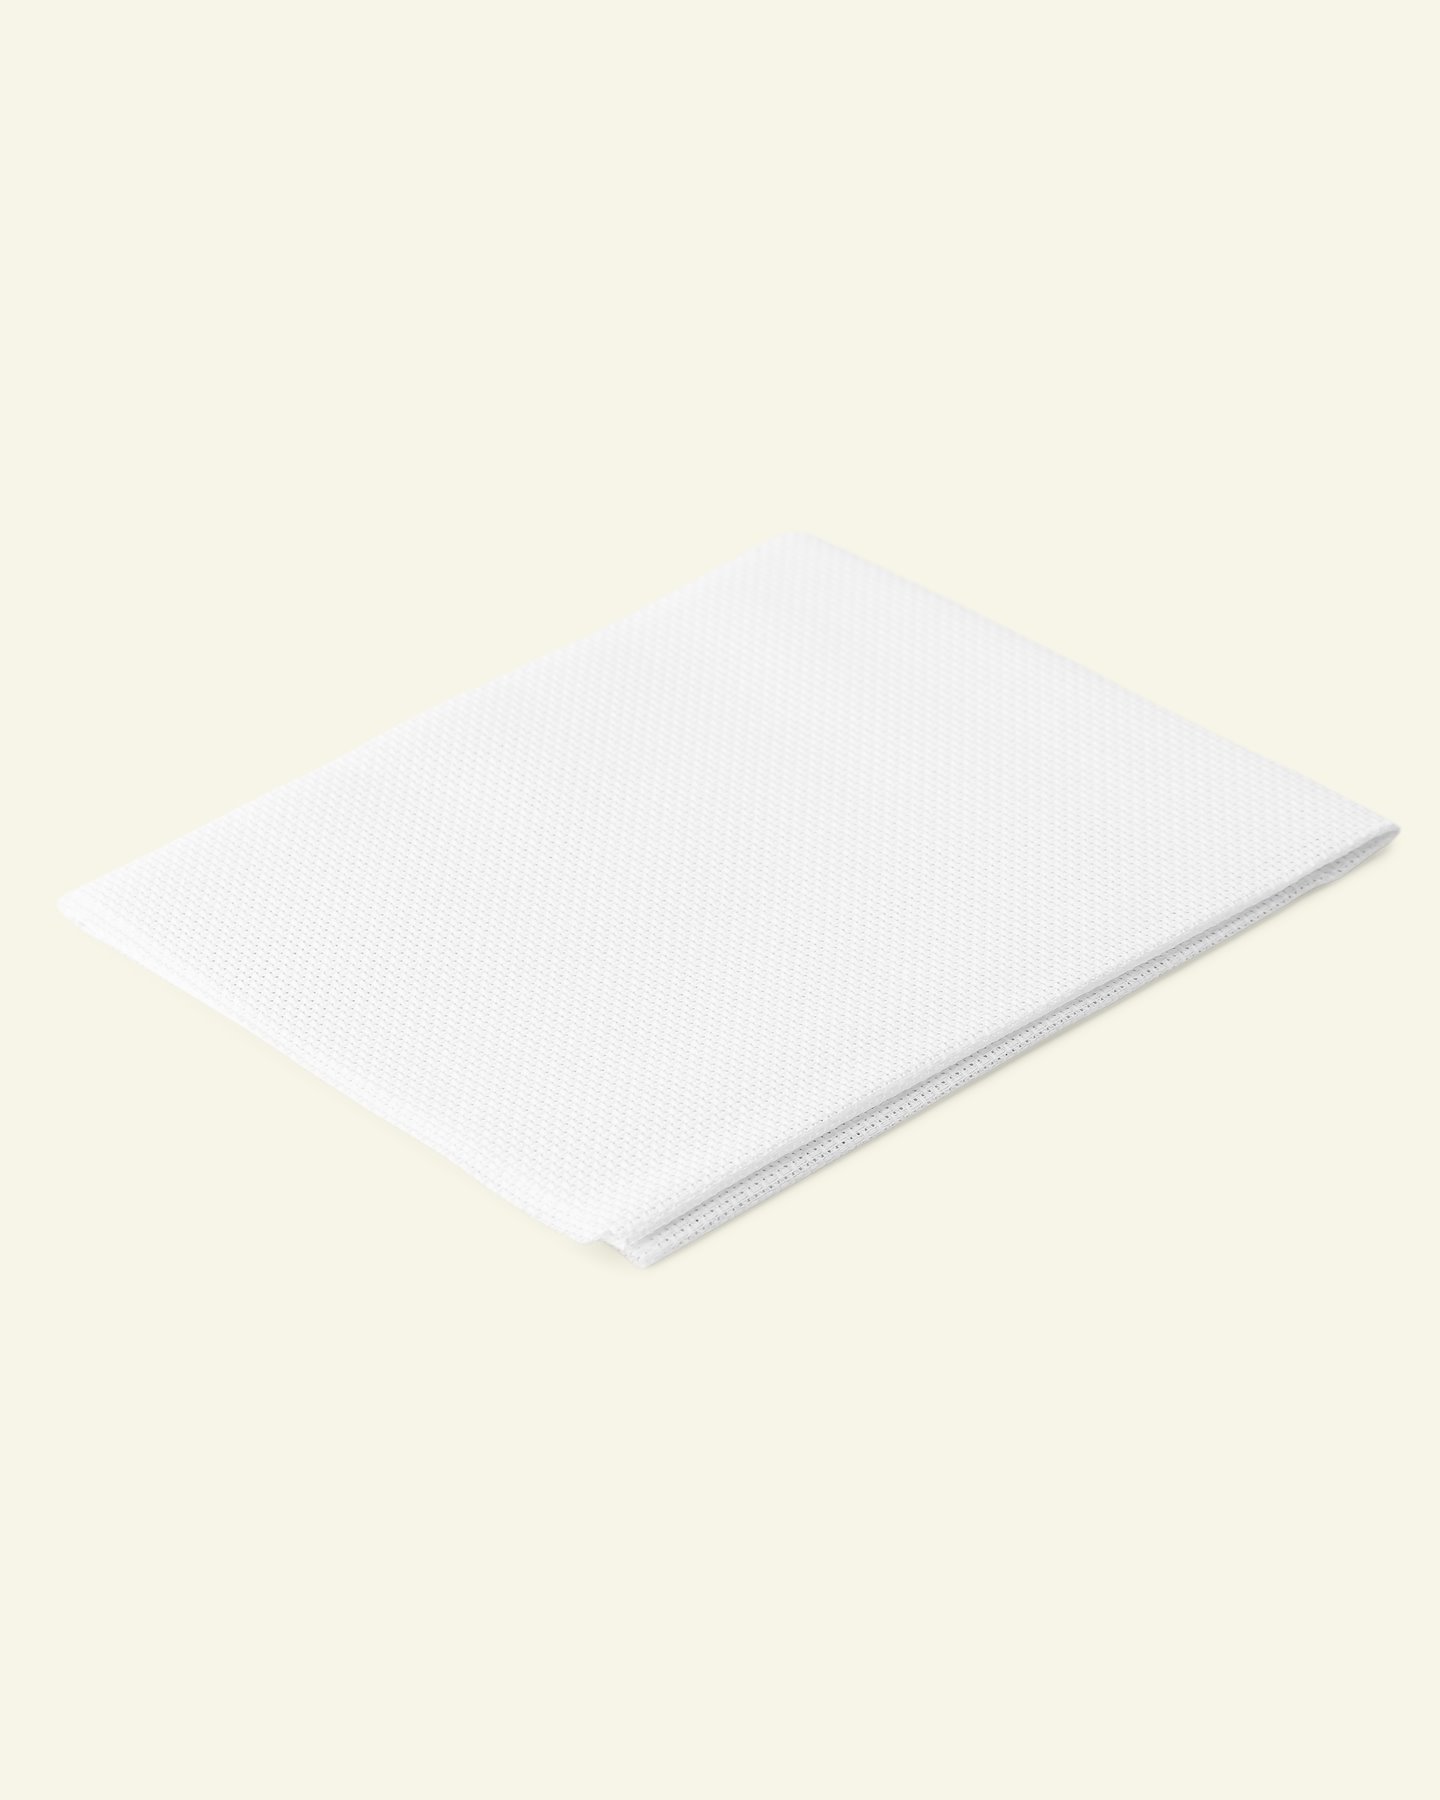 Aida fabric 5,4 blocks/cm 40x50cm white 98110_pack